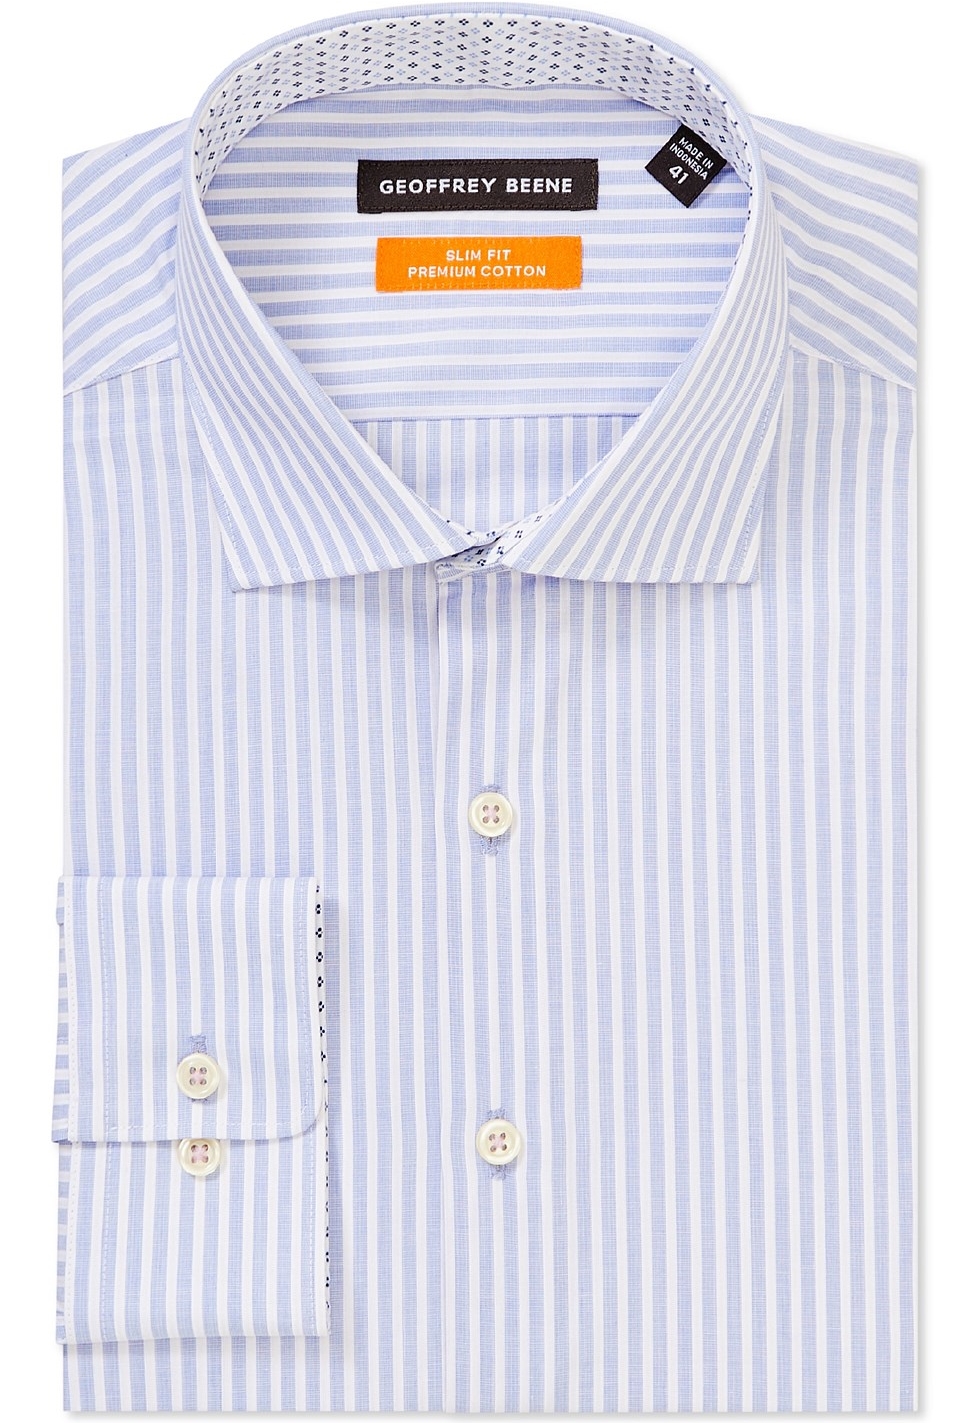 Geoffrey Beene blue stripe shirt